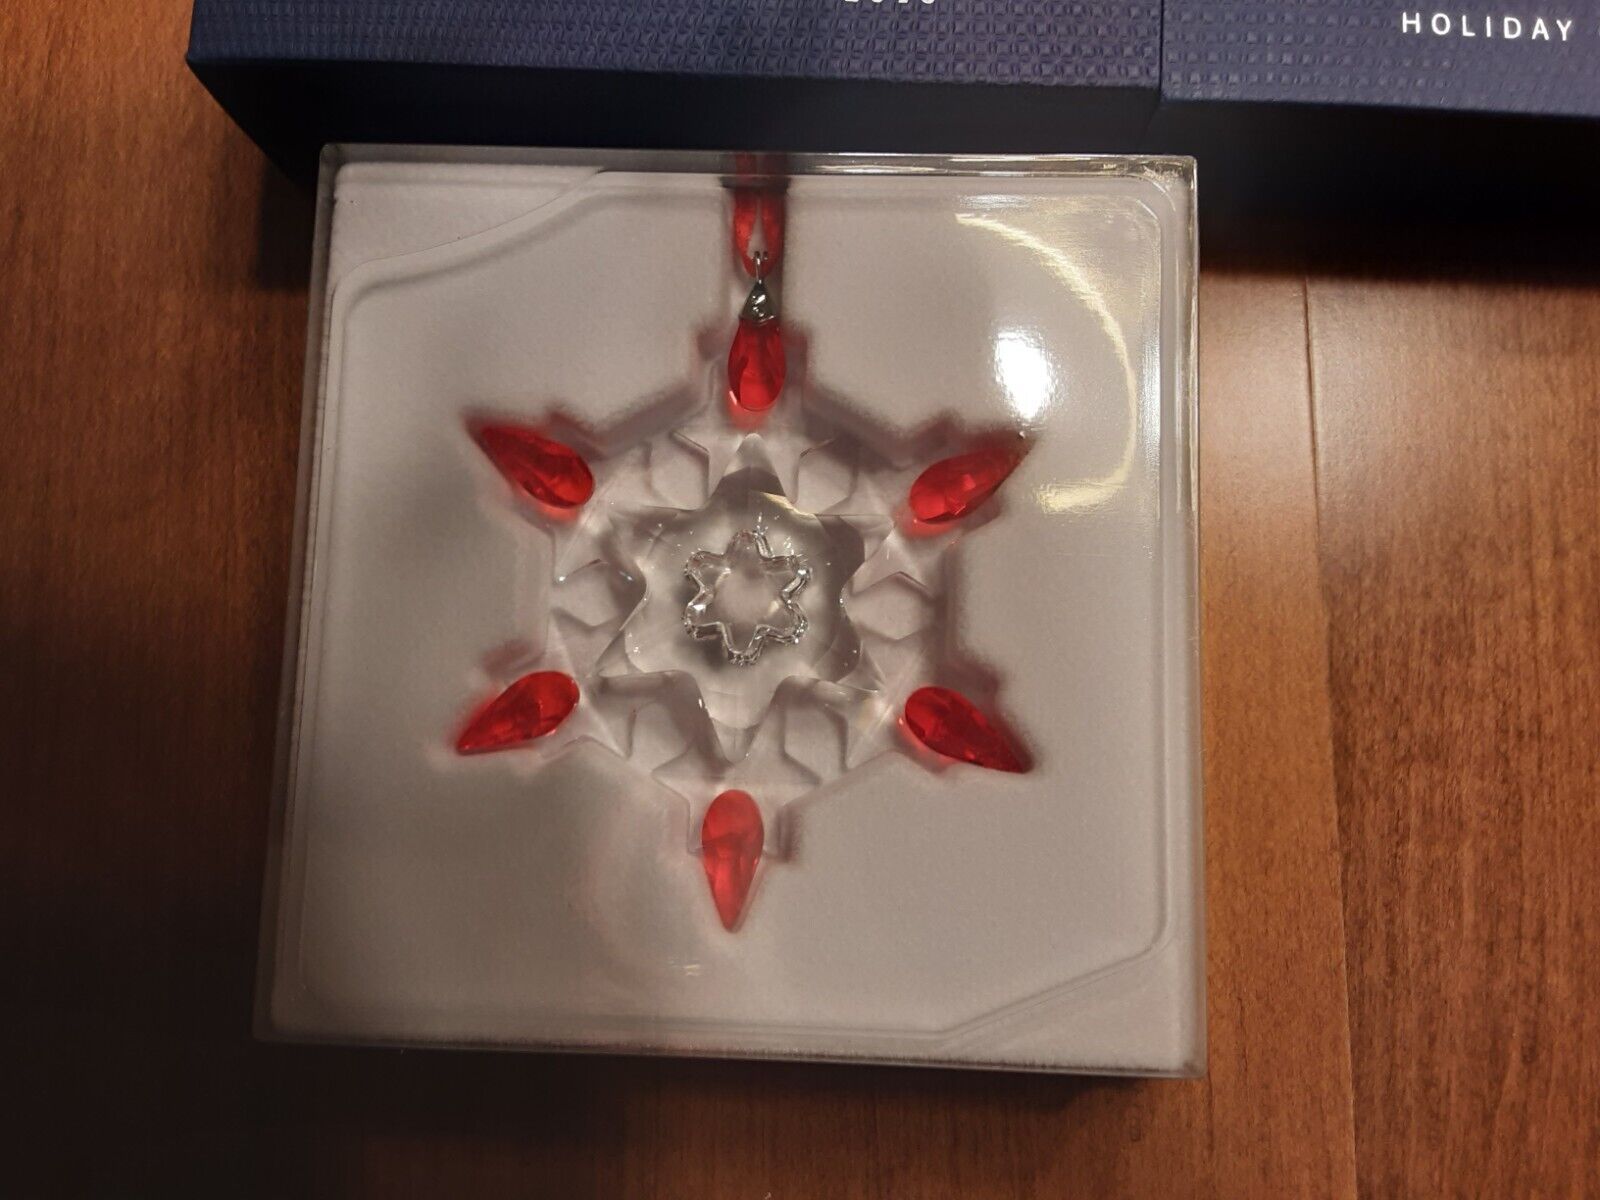 SWAROVSKI HOLIDAY Ornament- 2010- Austrian Crystal Snowflake w/RED tips- NEW-NIB